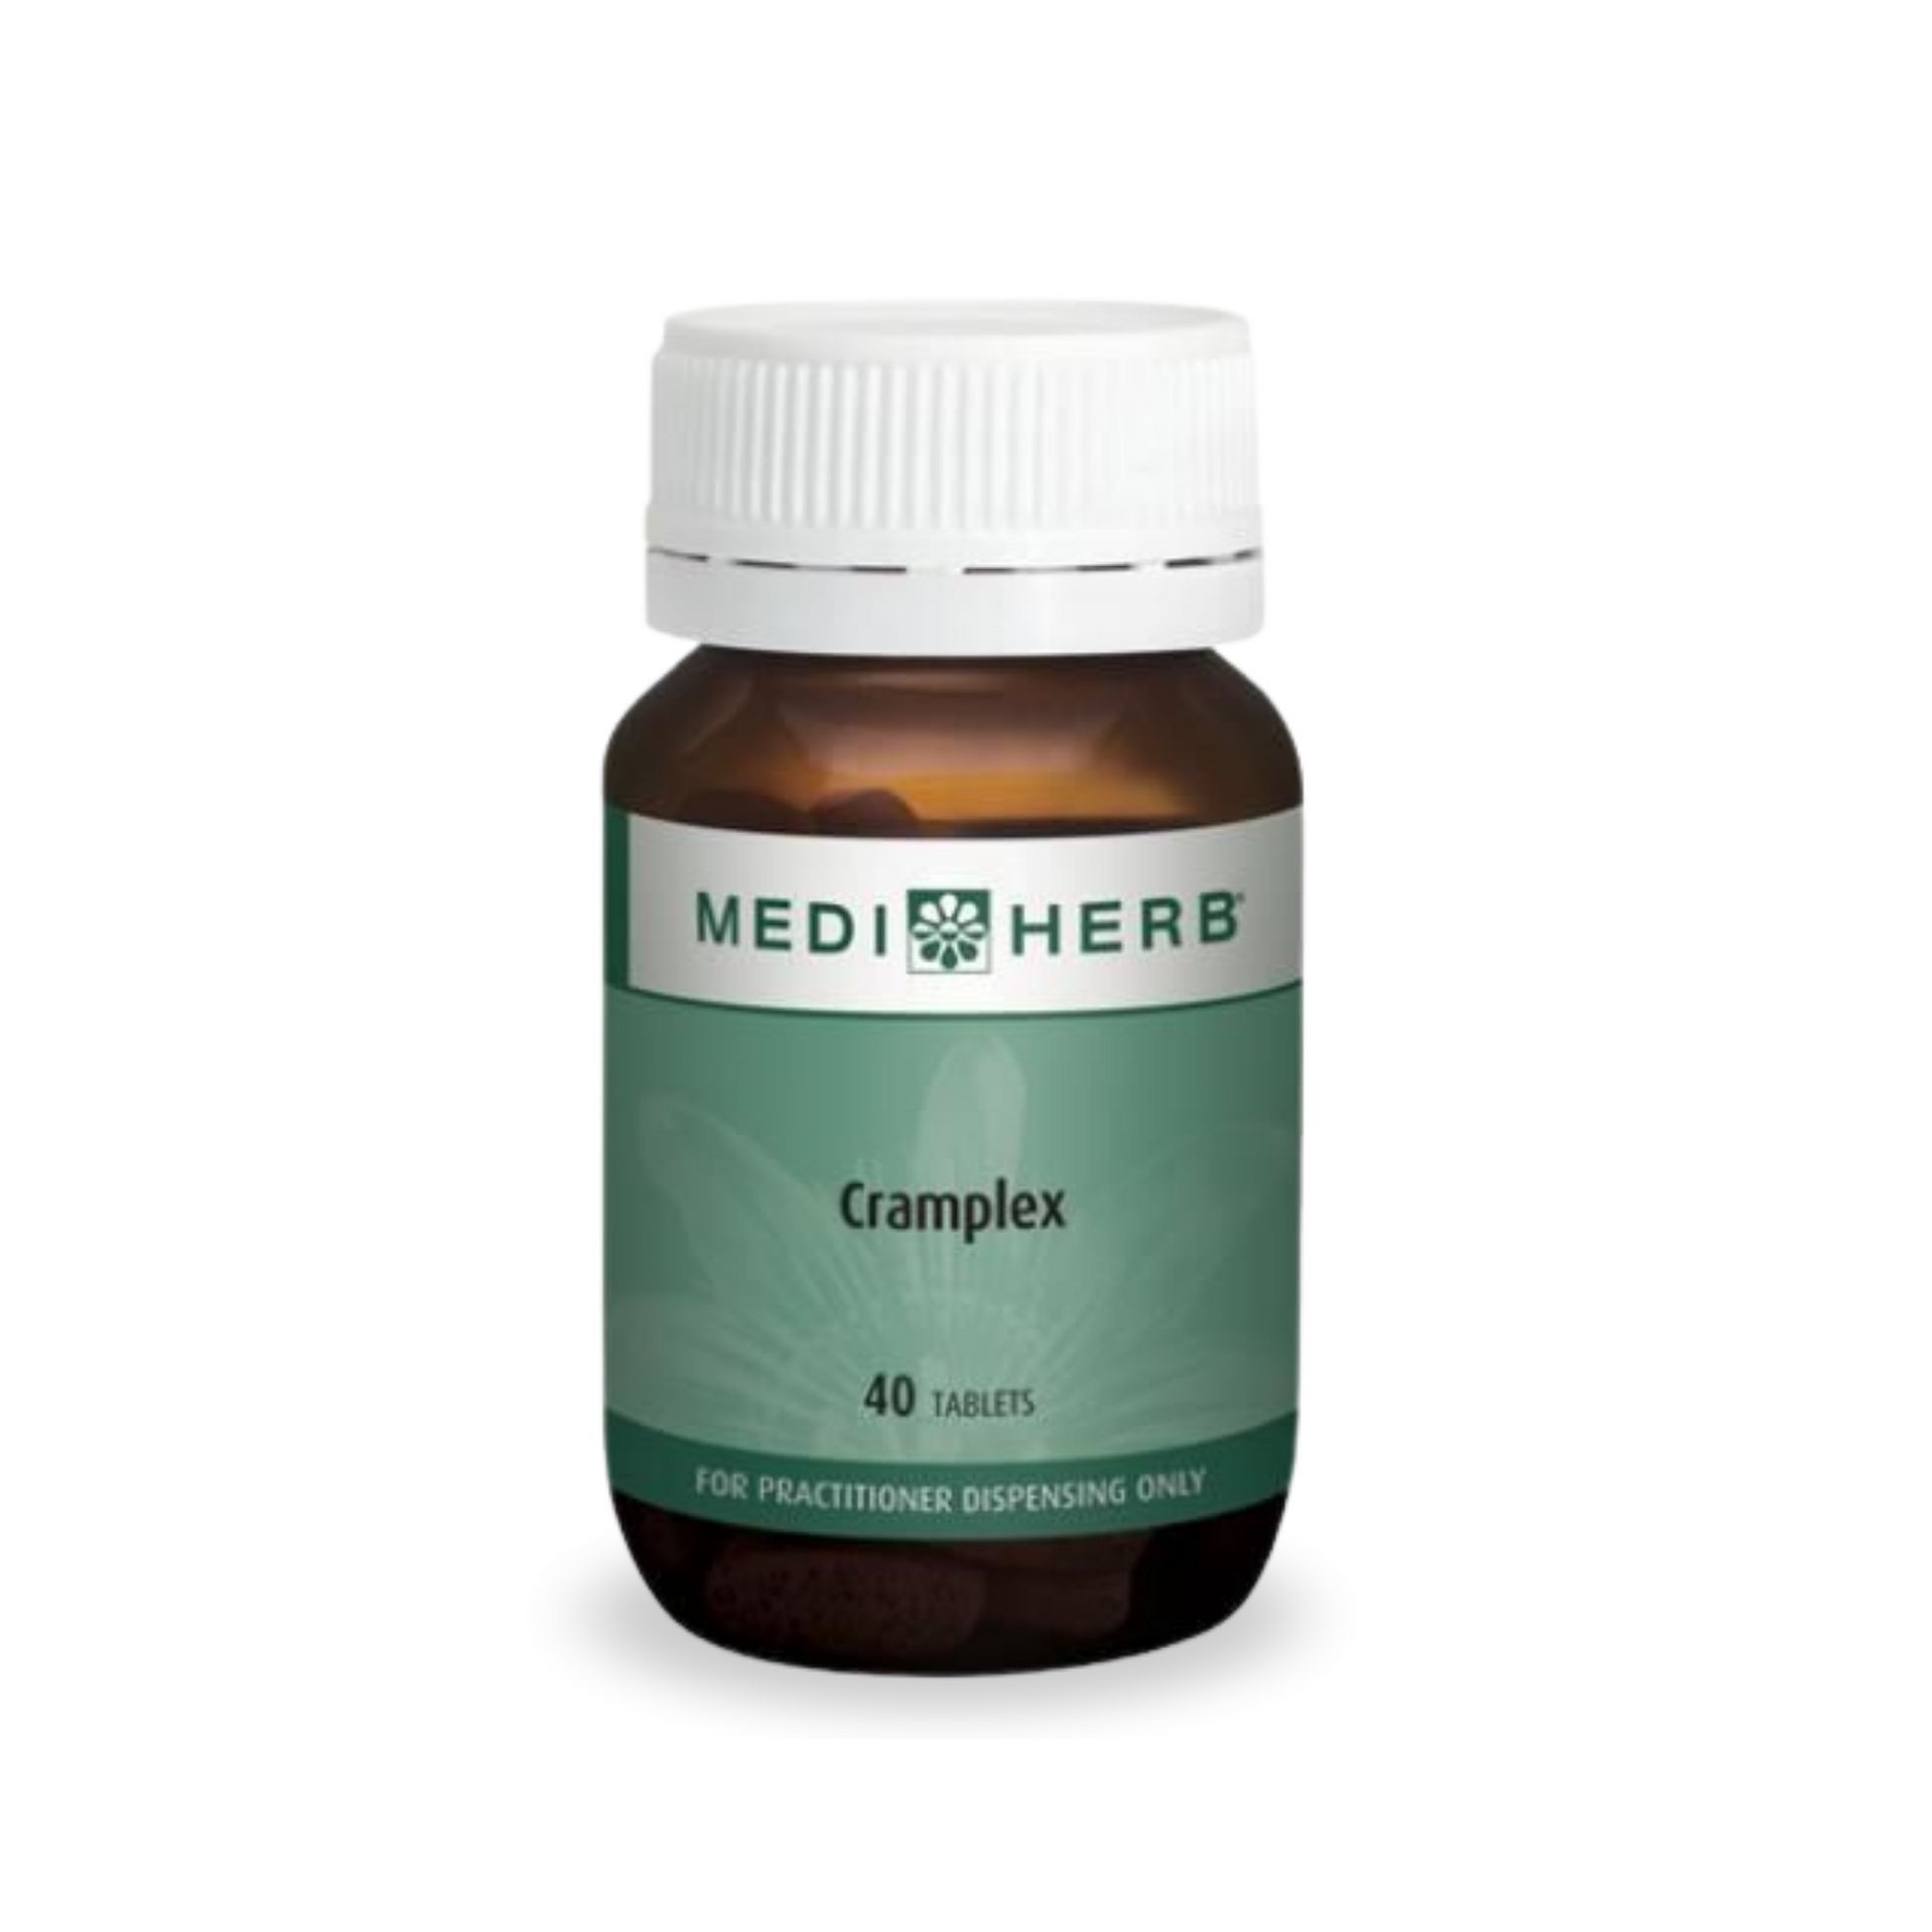 MediHerb Cramplex 40 Tablets 